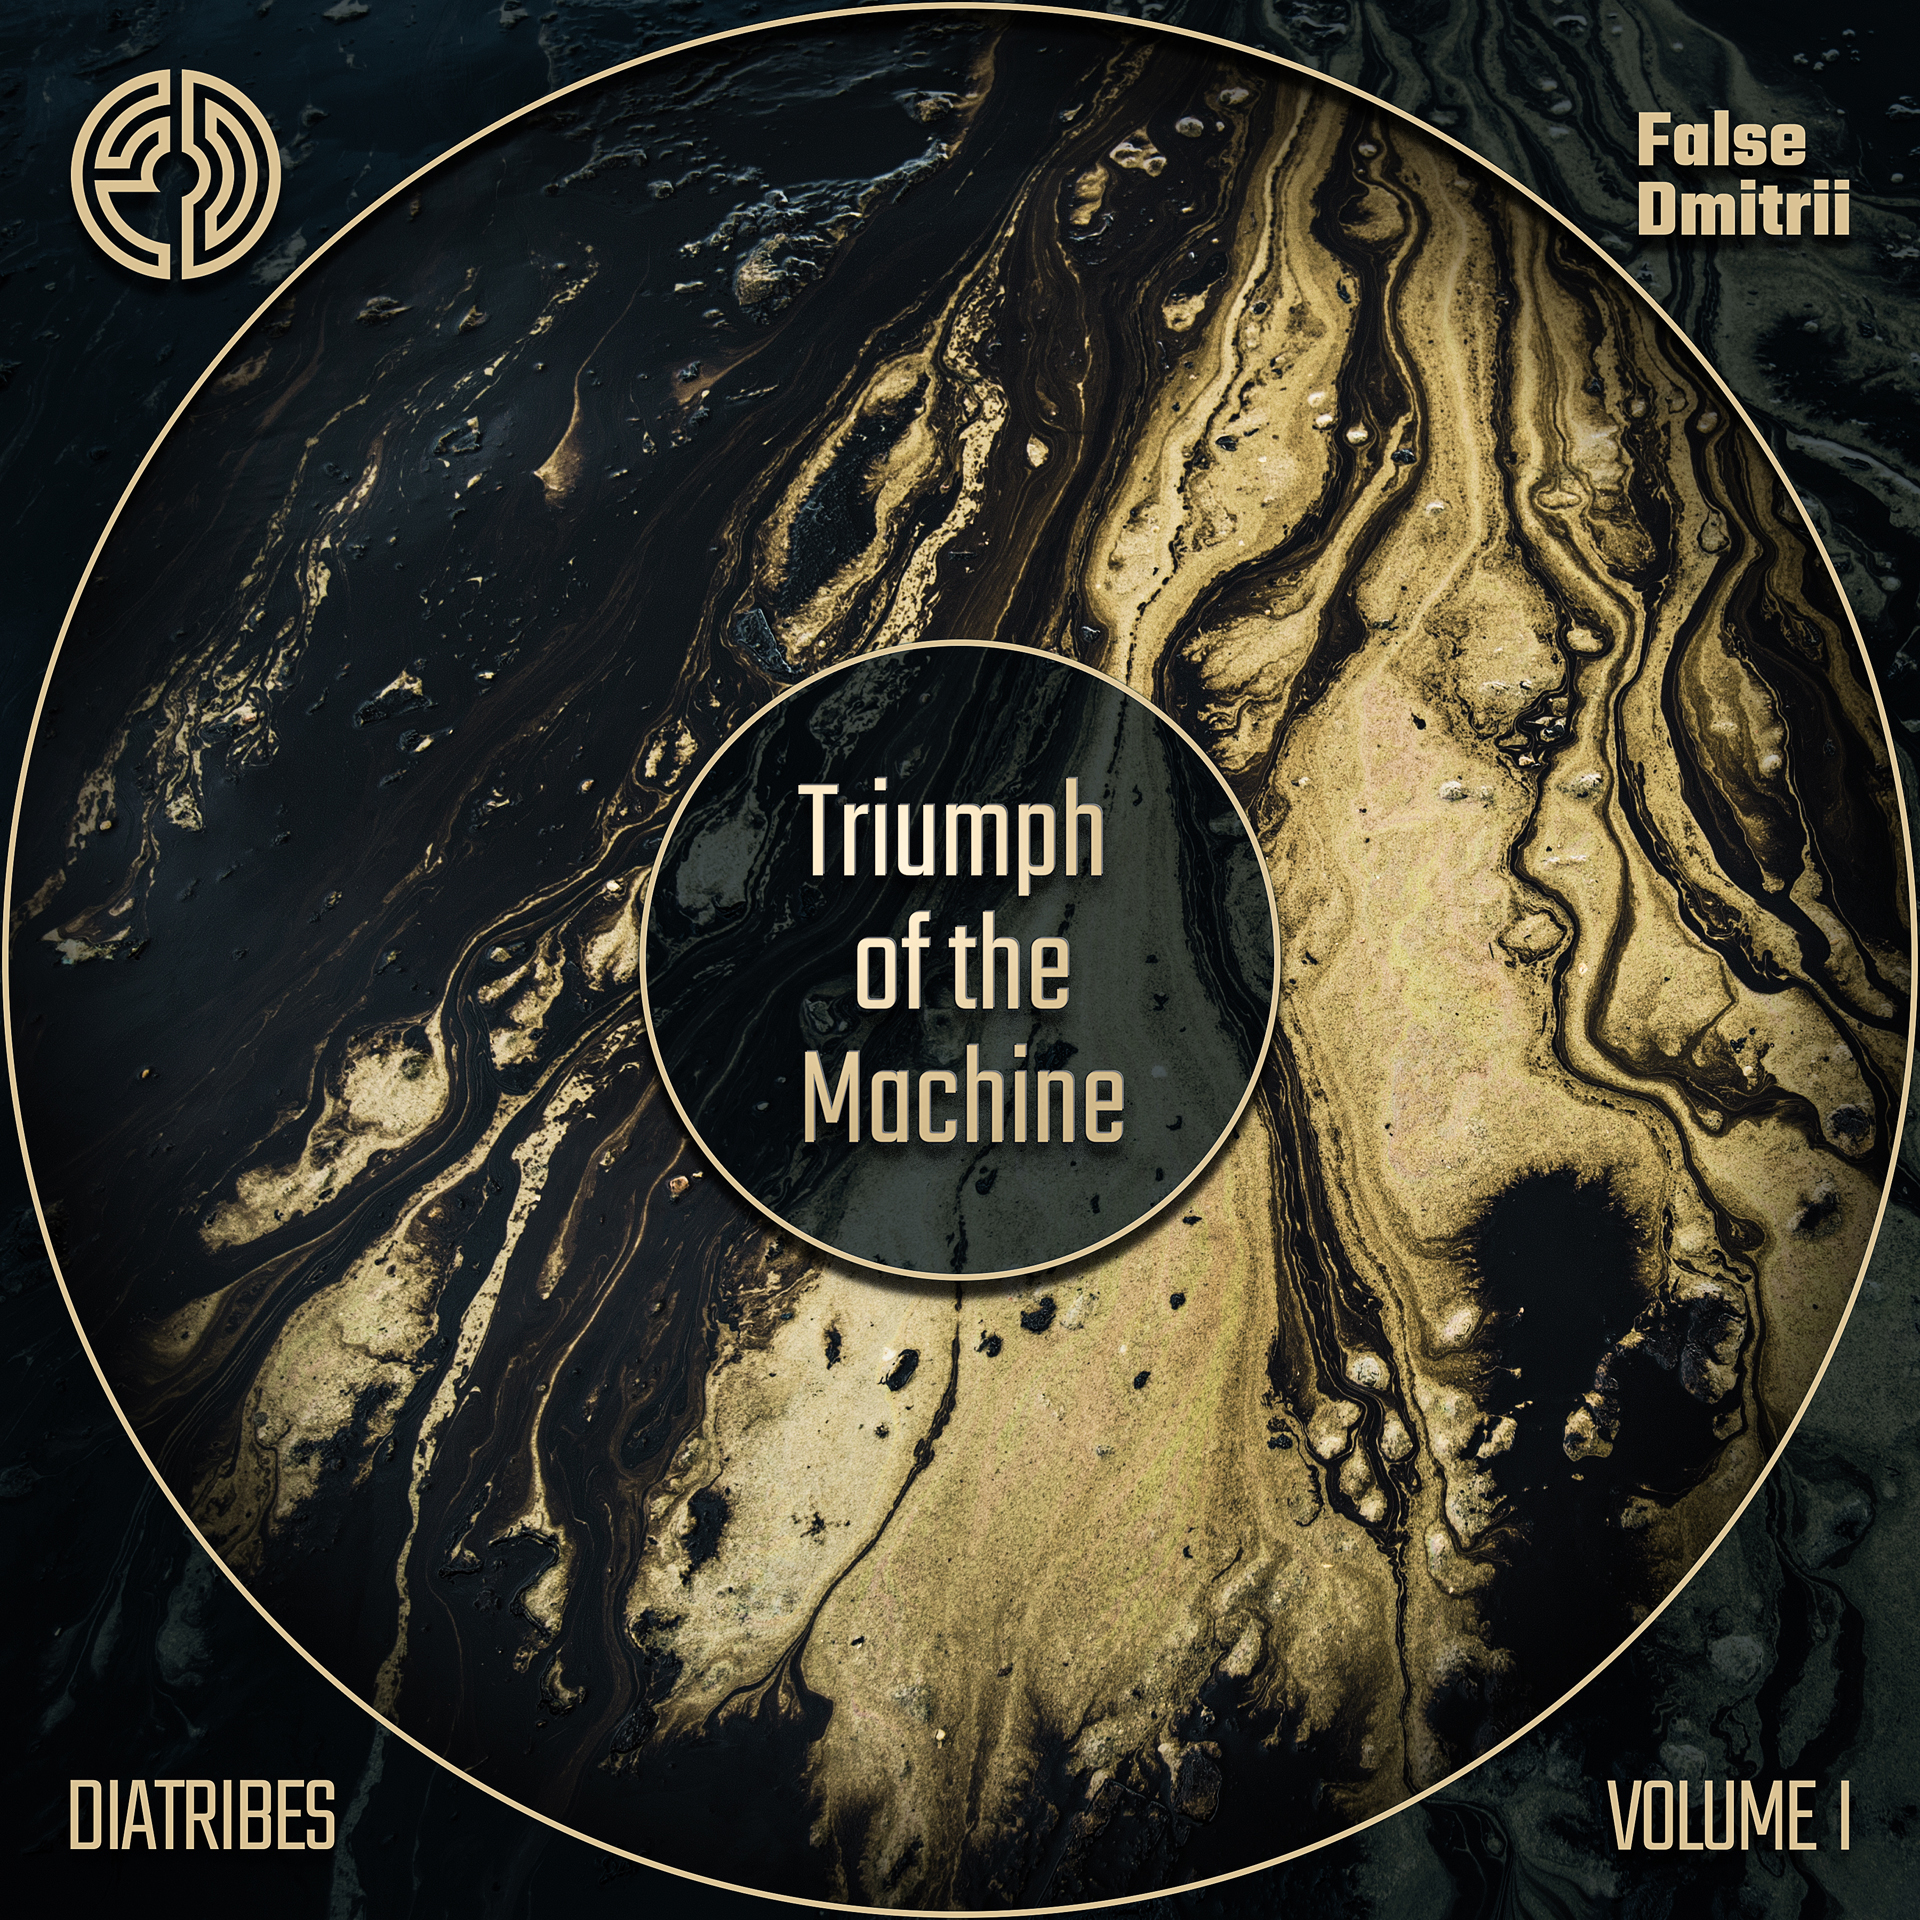 DIATRIBES: VOLUME I - Triumph of the Machine